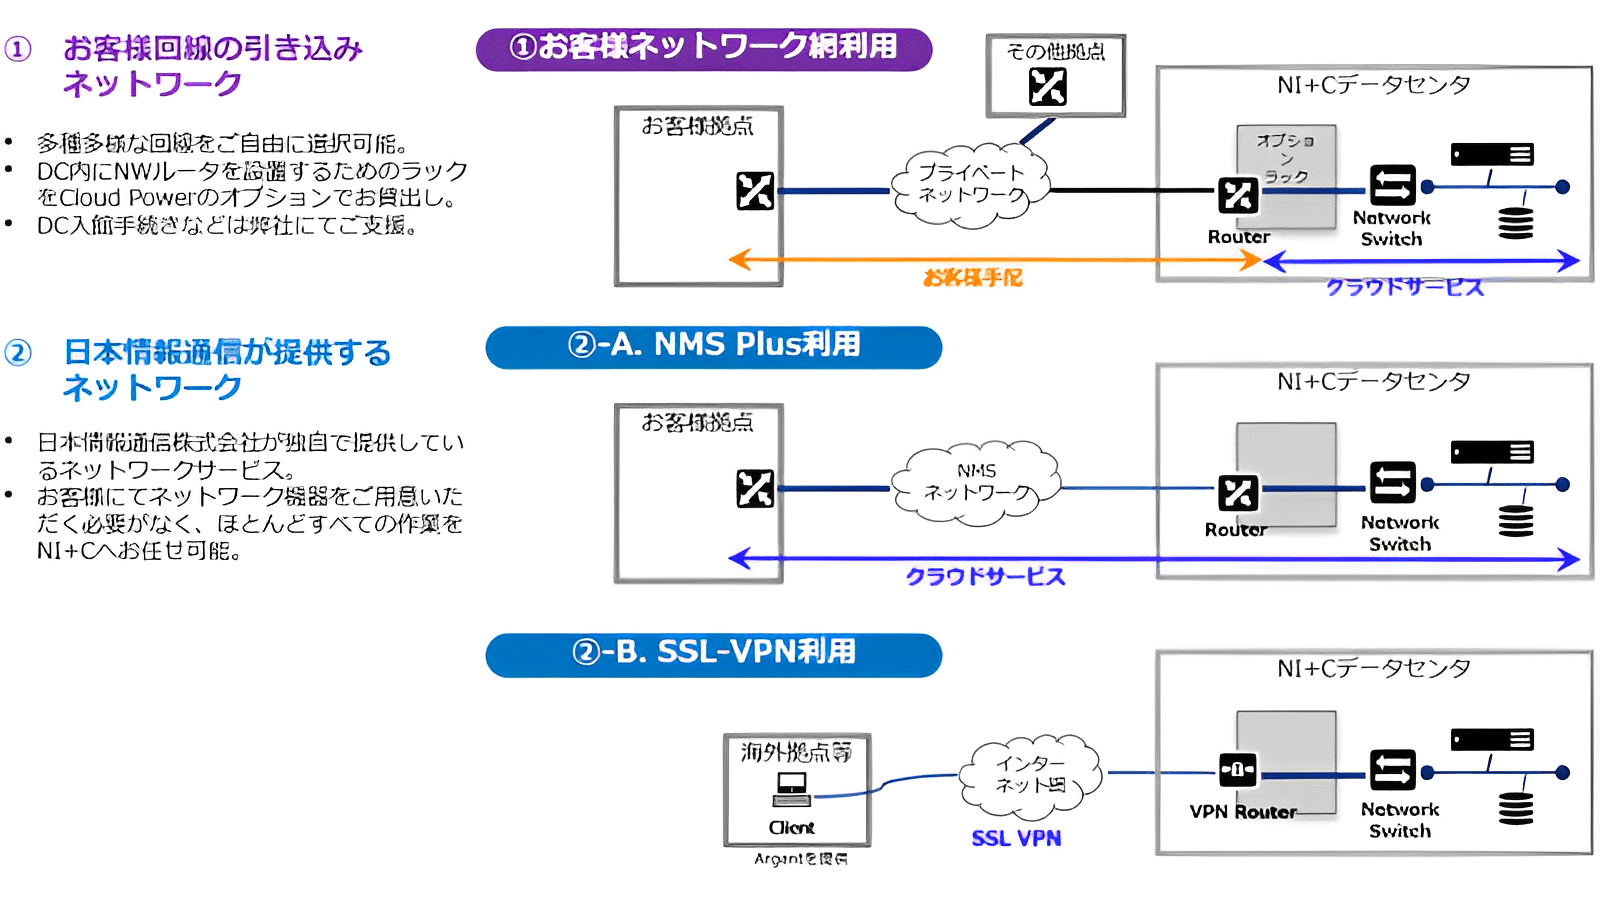 Cloud Powerシステム構成 - ネットワーク